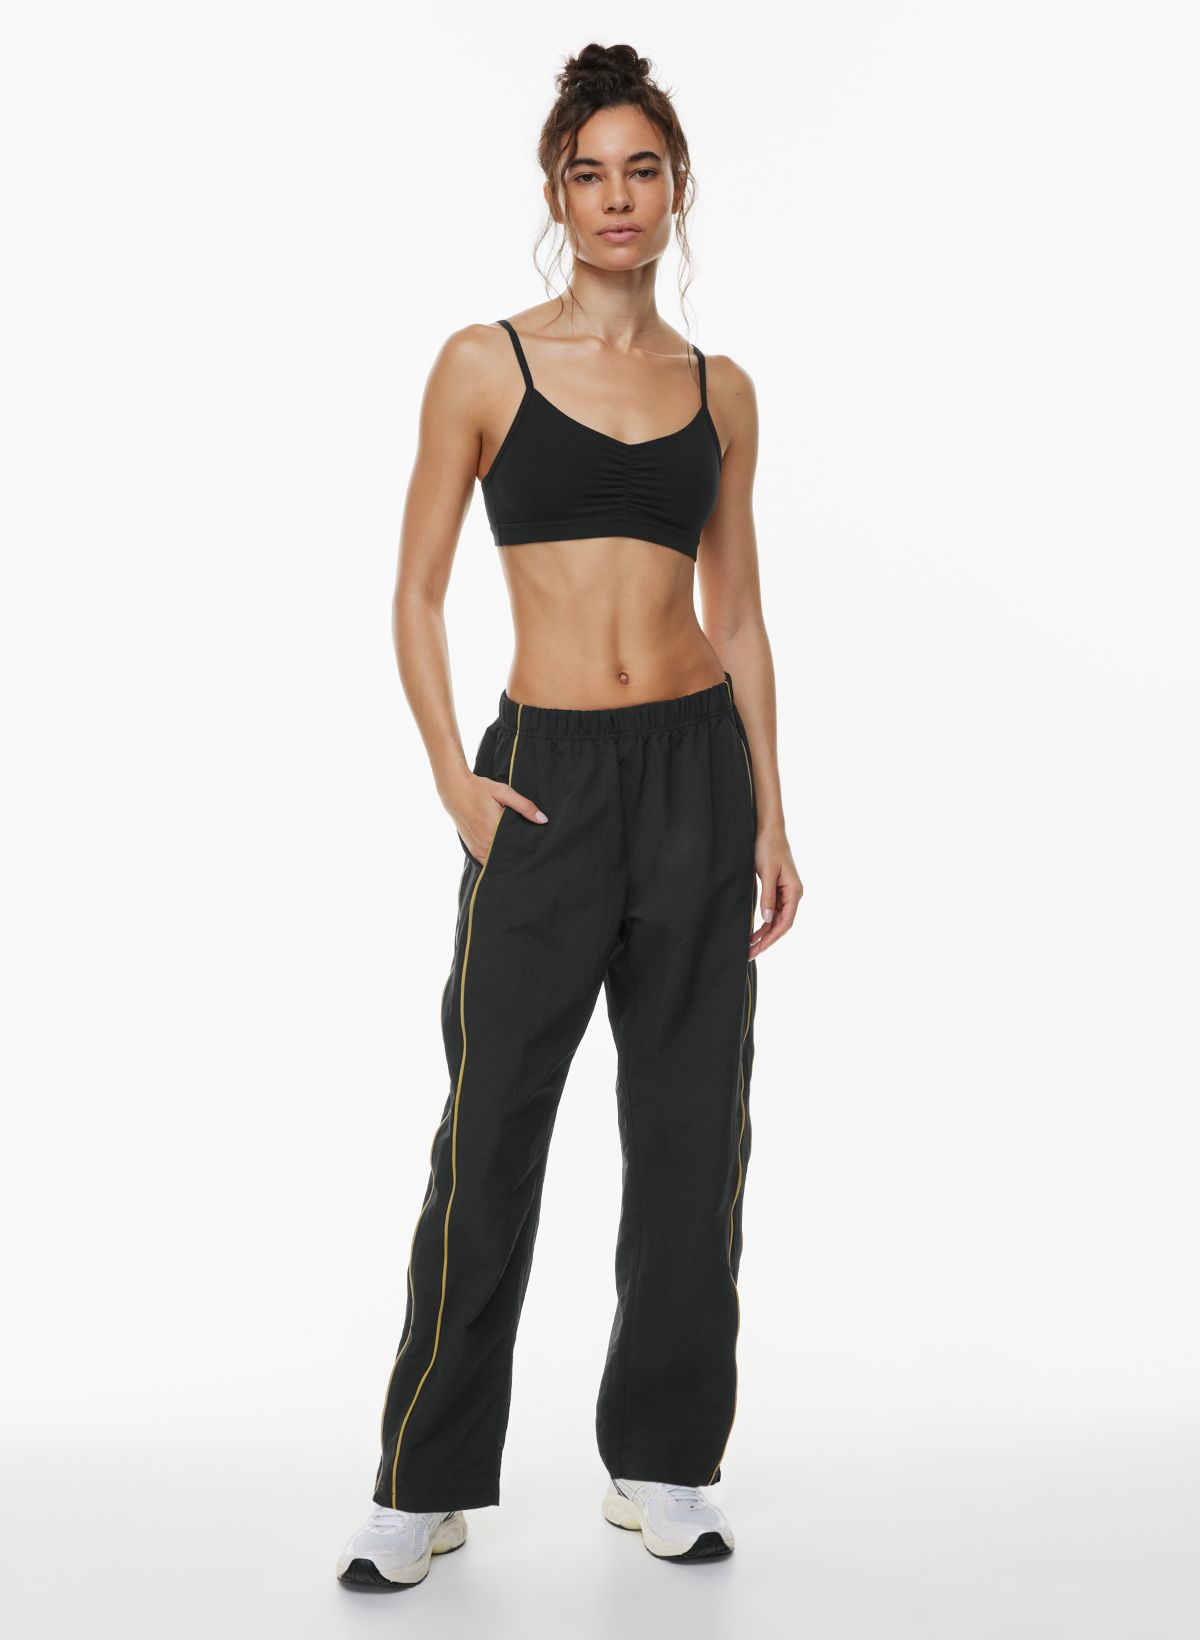 Fila Sport Running Capri Pants Women's Size XS Mid Rise Stretch Workout  Pull On